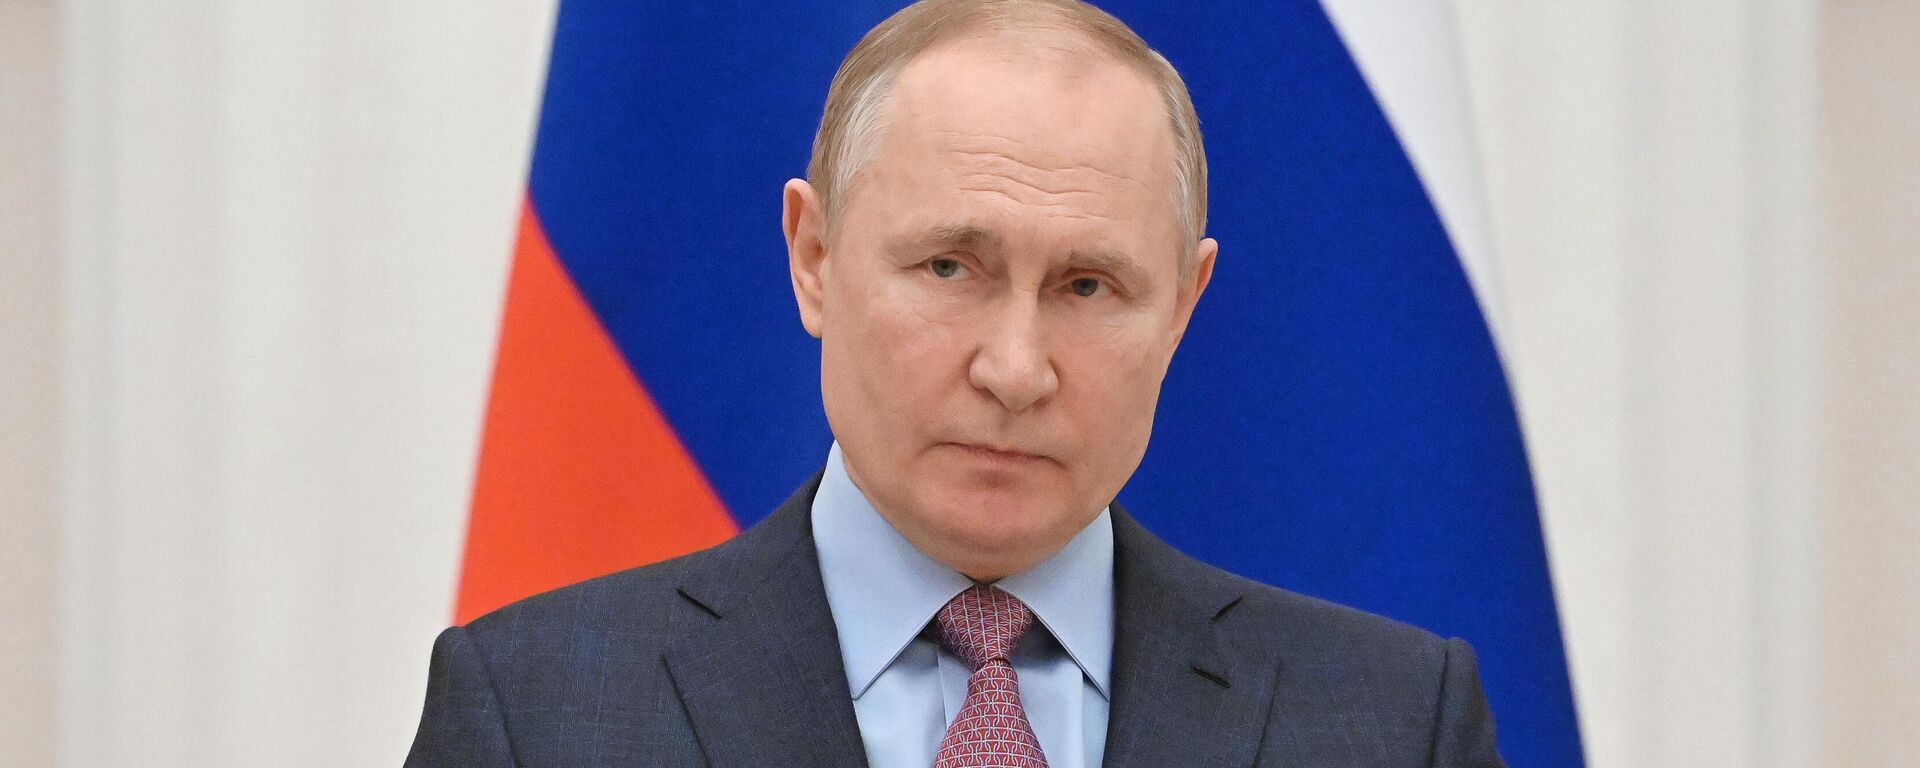 Rusijos prezidentas Vladimiras Putinas - Sputnik Lietuva, 1920, 27.02.2022